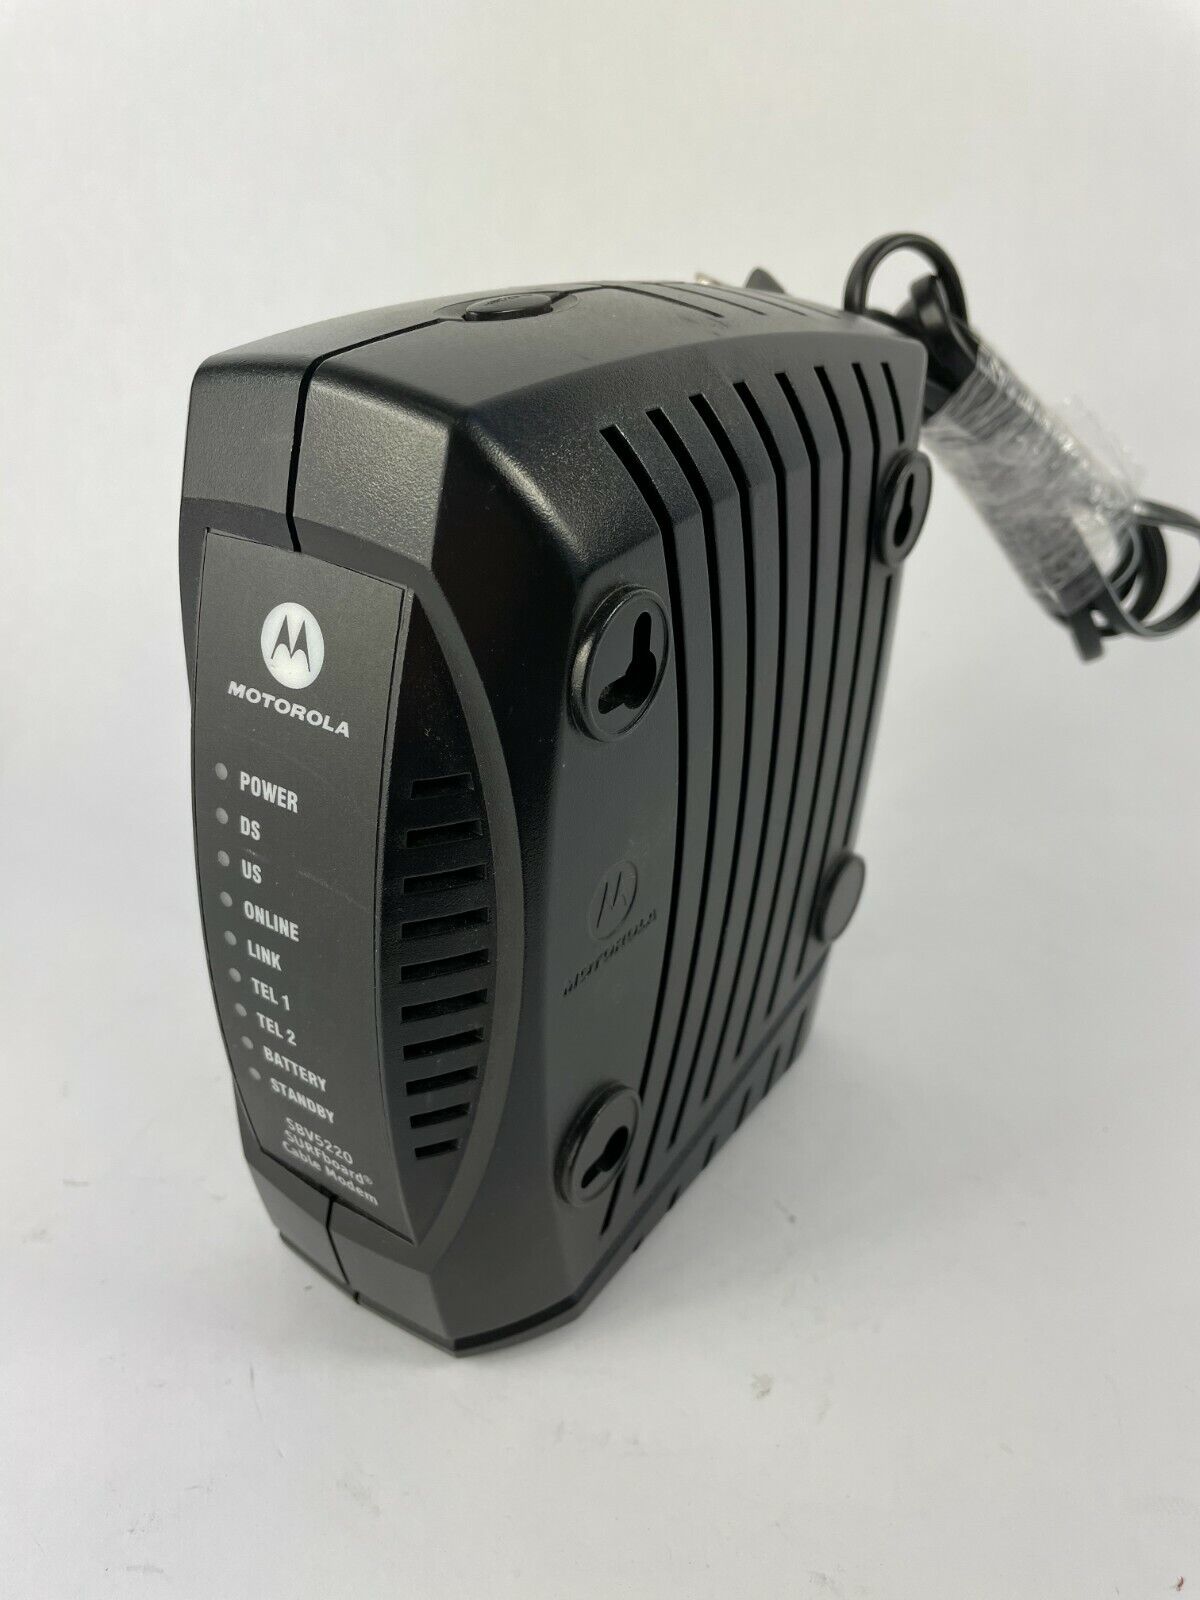 Genuine Motorola SBV5220 Cable Modem